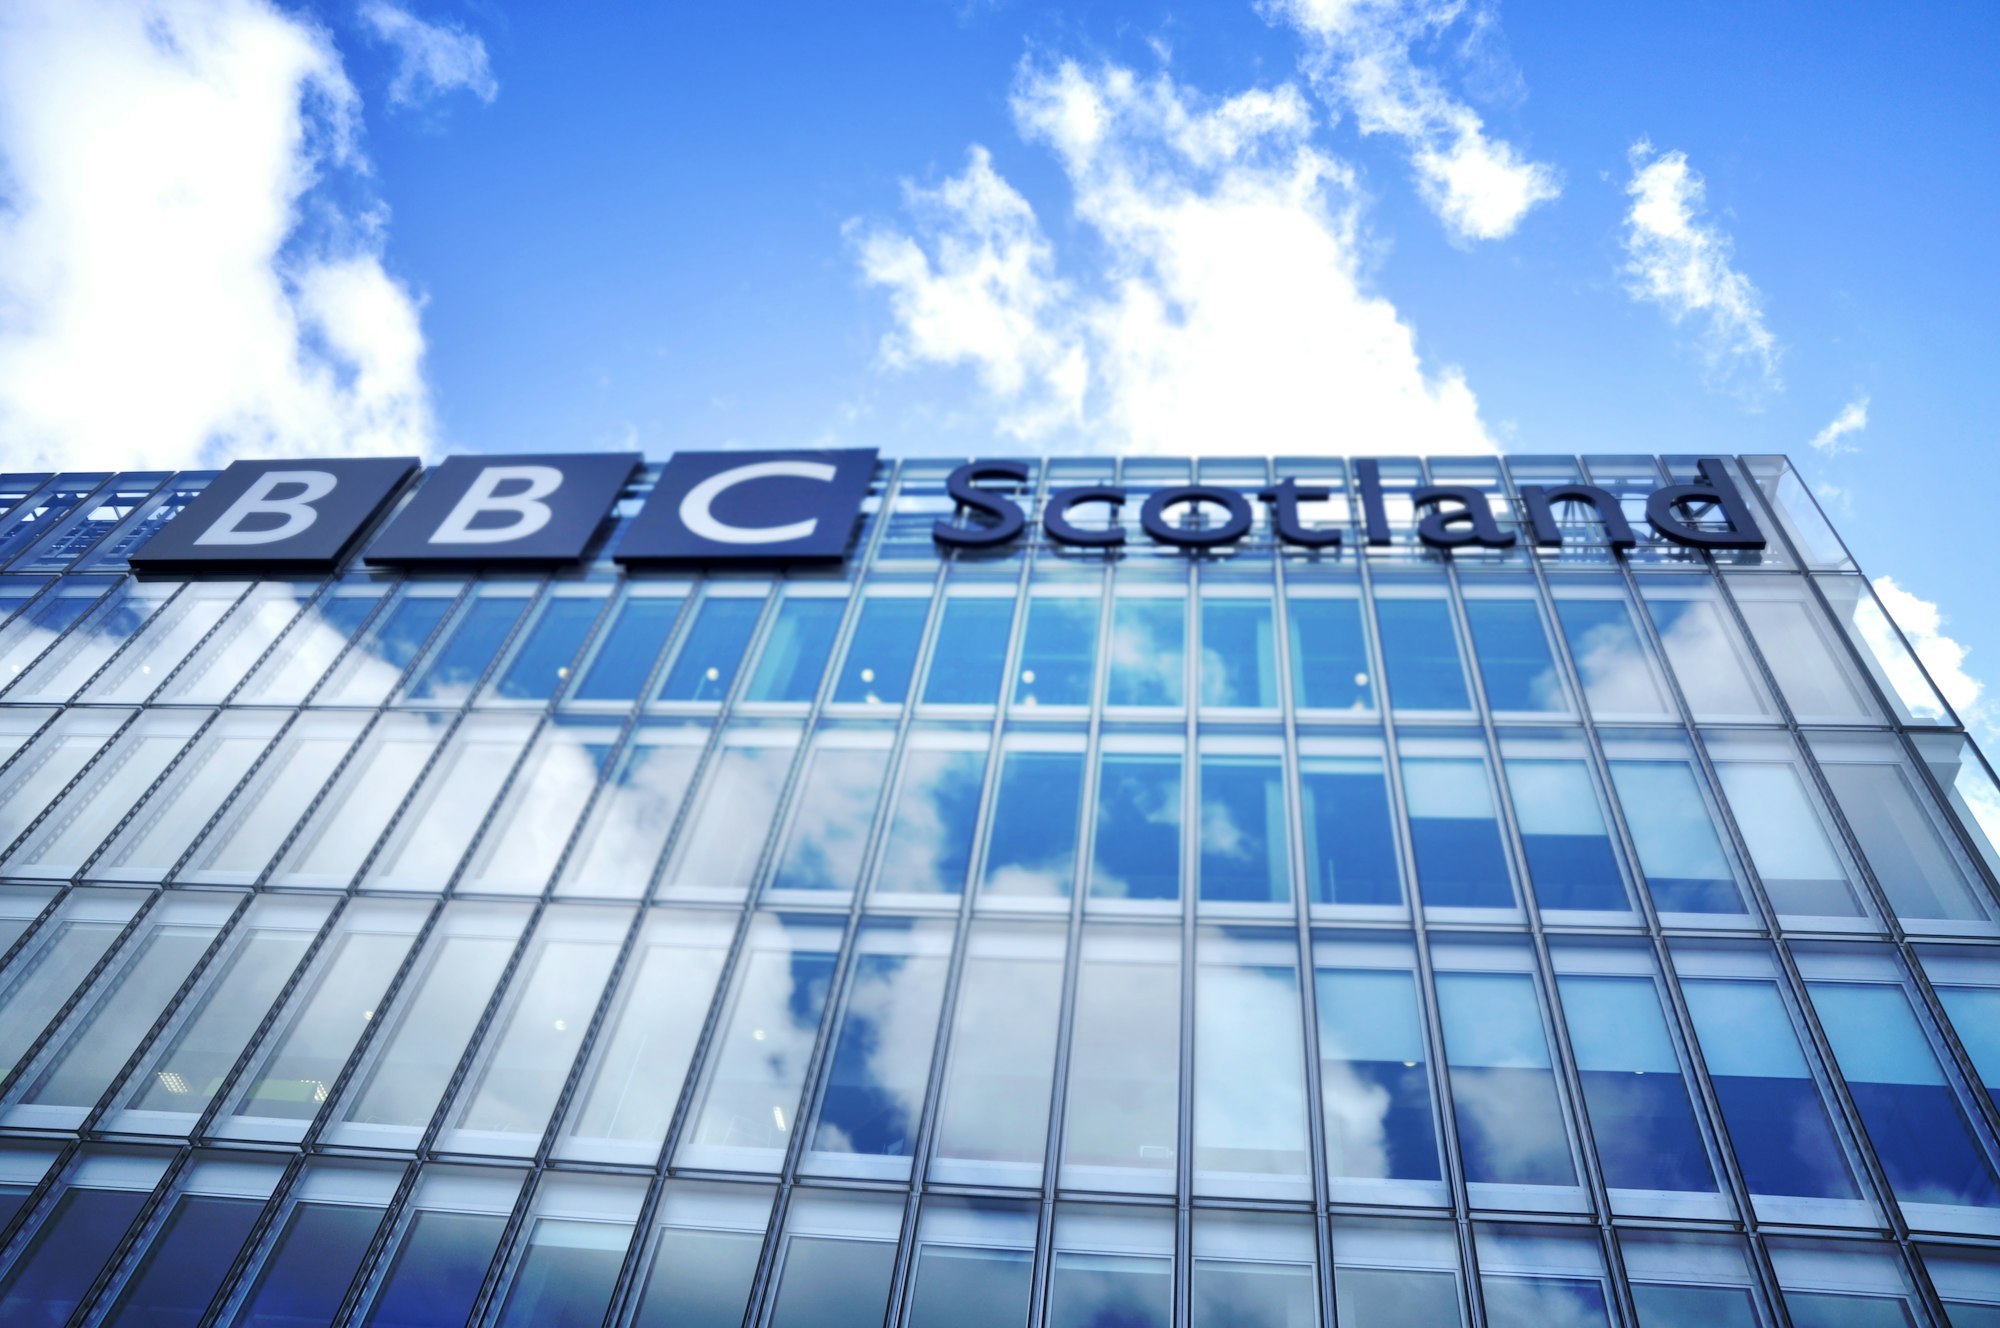 low angle photo of BBC Scotland building under blue sky